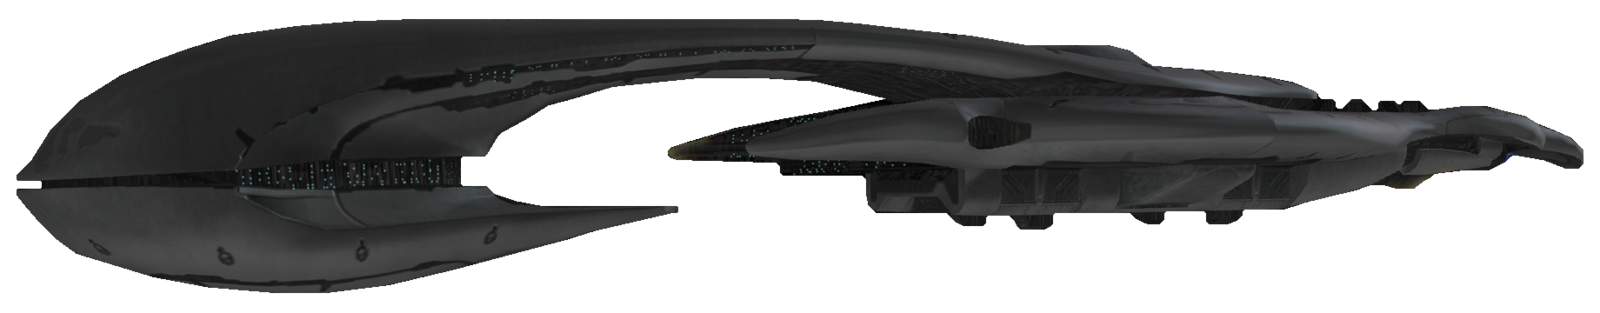 【HALO艦船頻道3】CAS級攻擊母艦 —— 星盟艦隊理想的旗艦-第17張